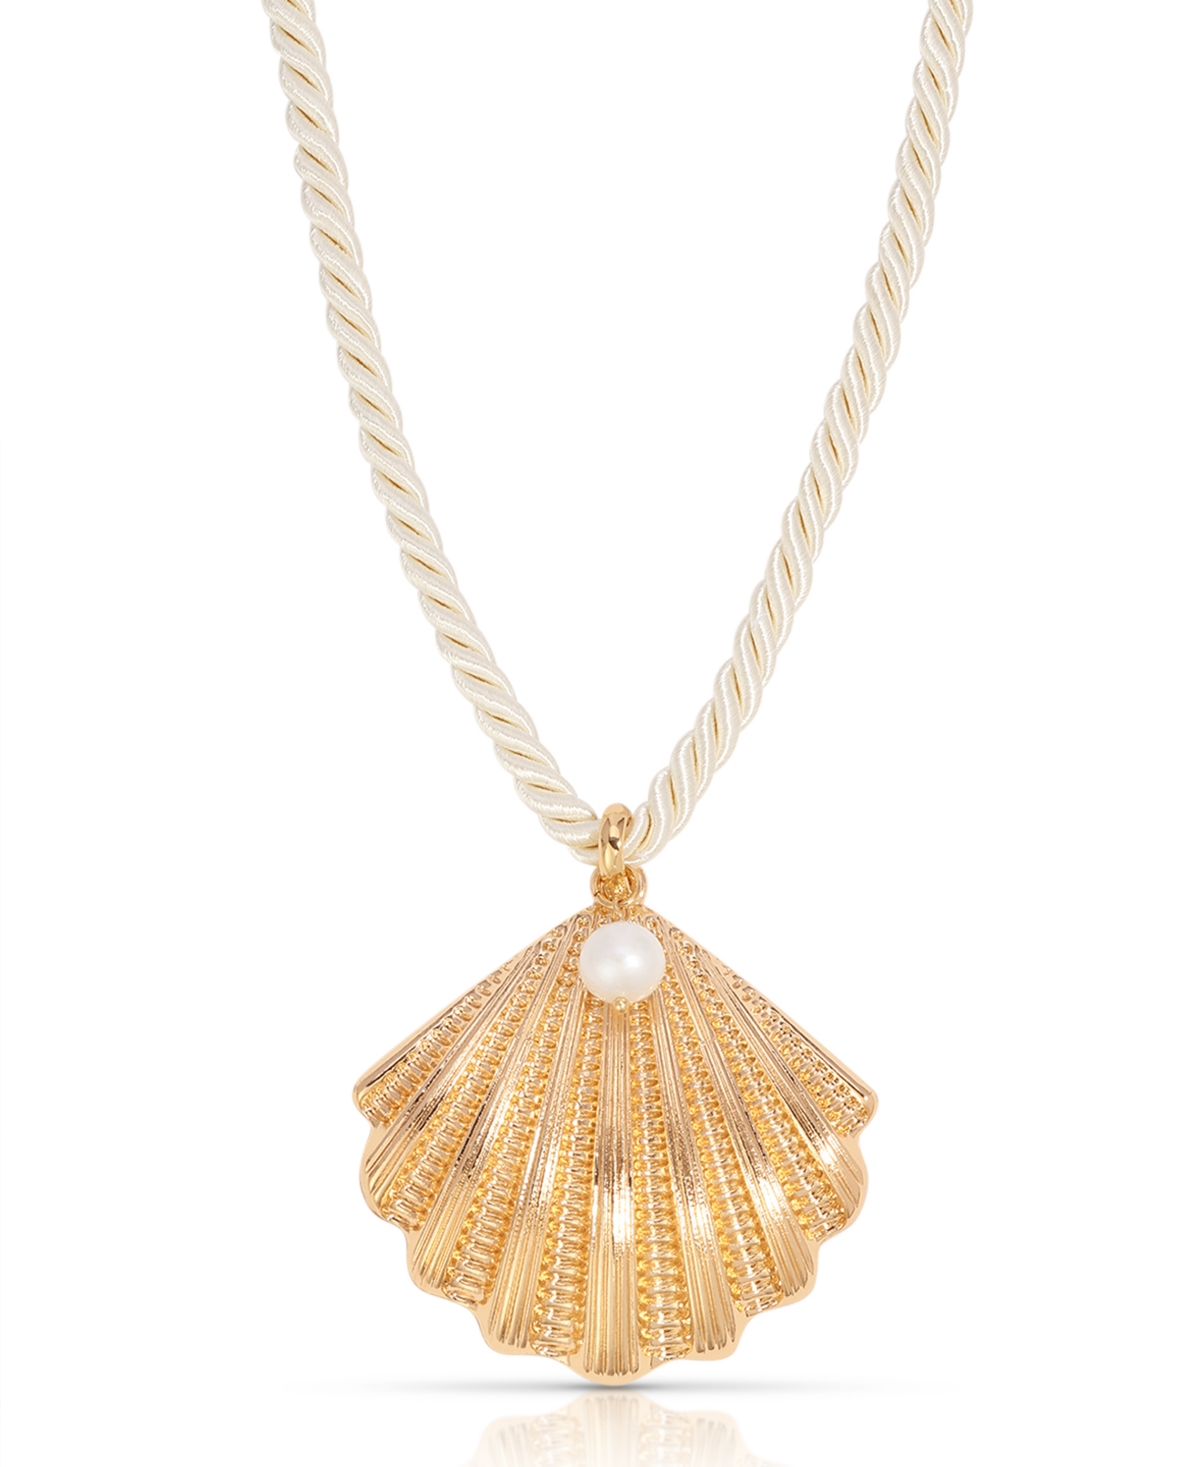 Silk Cord Scallop Shell Pendant Necklace - Gold